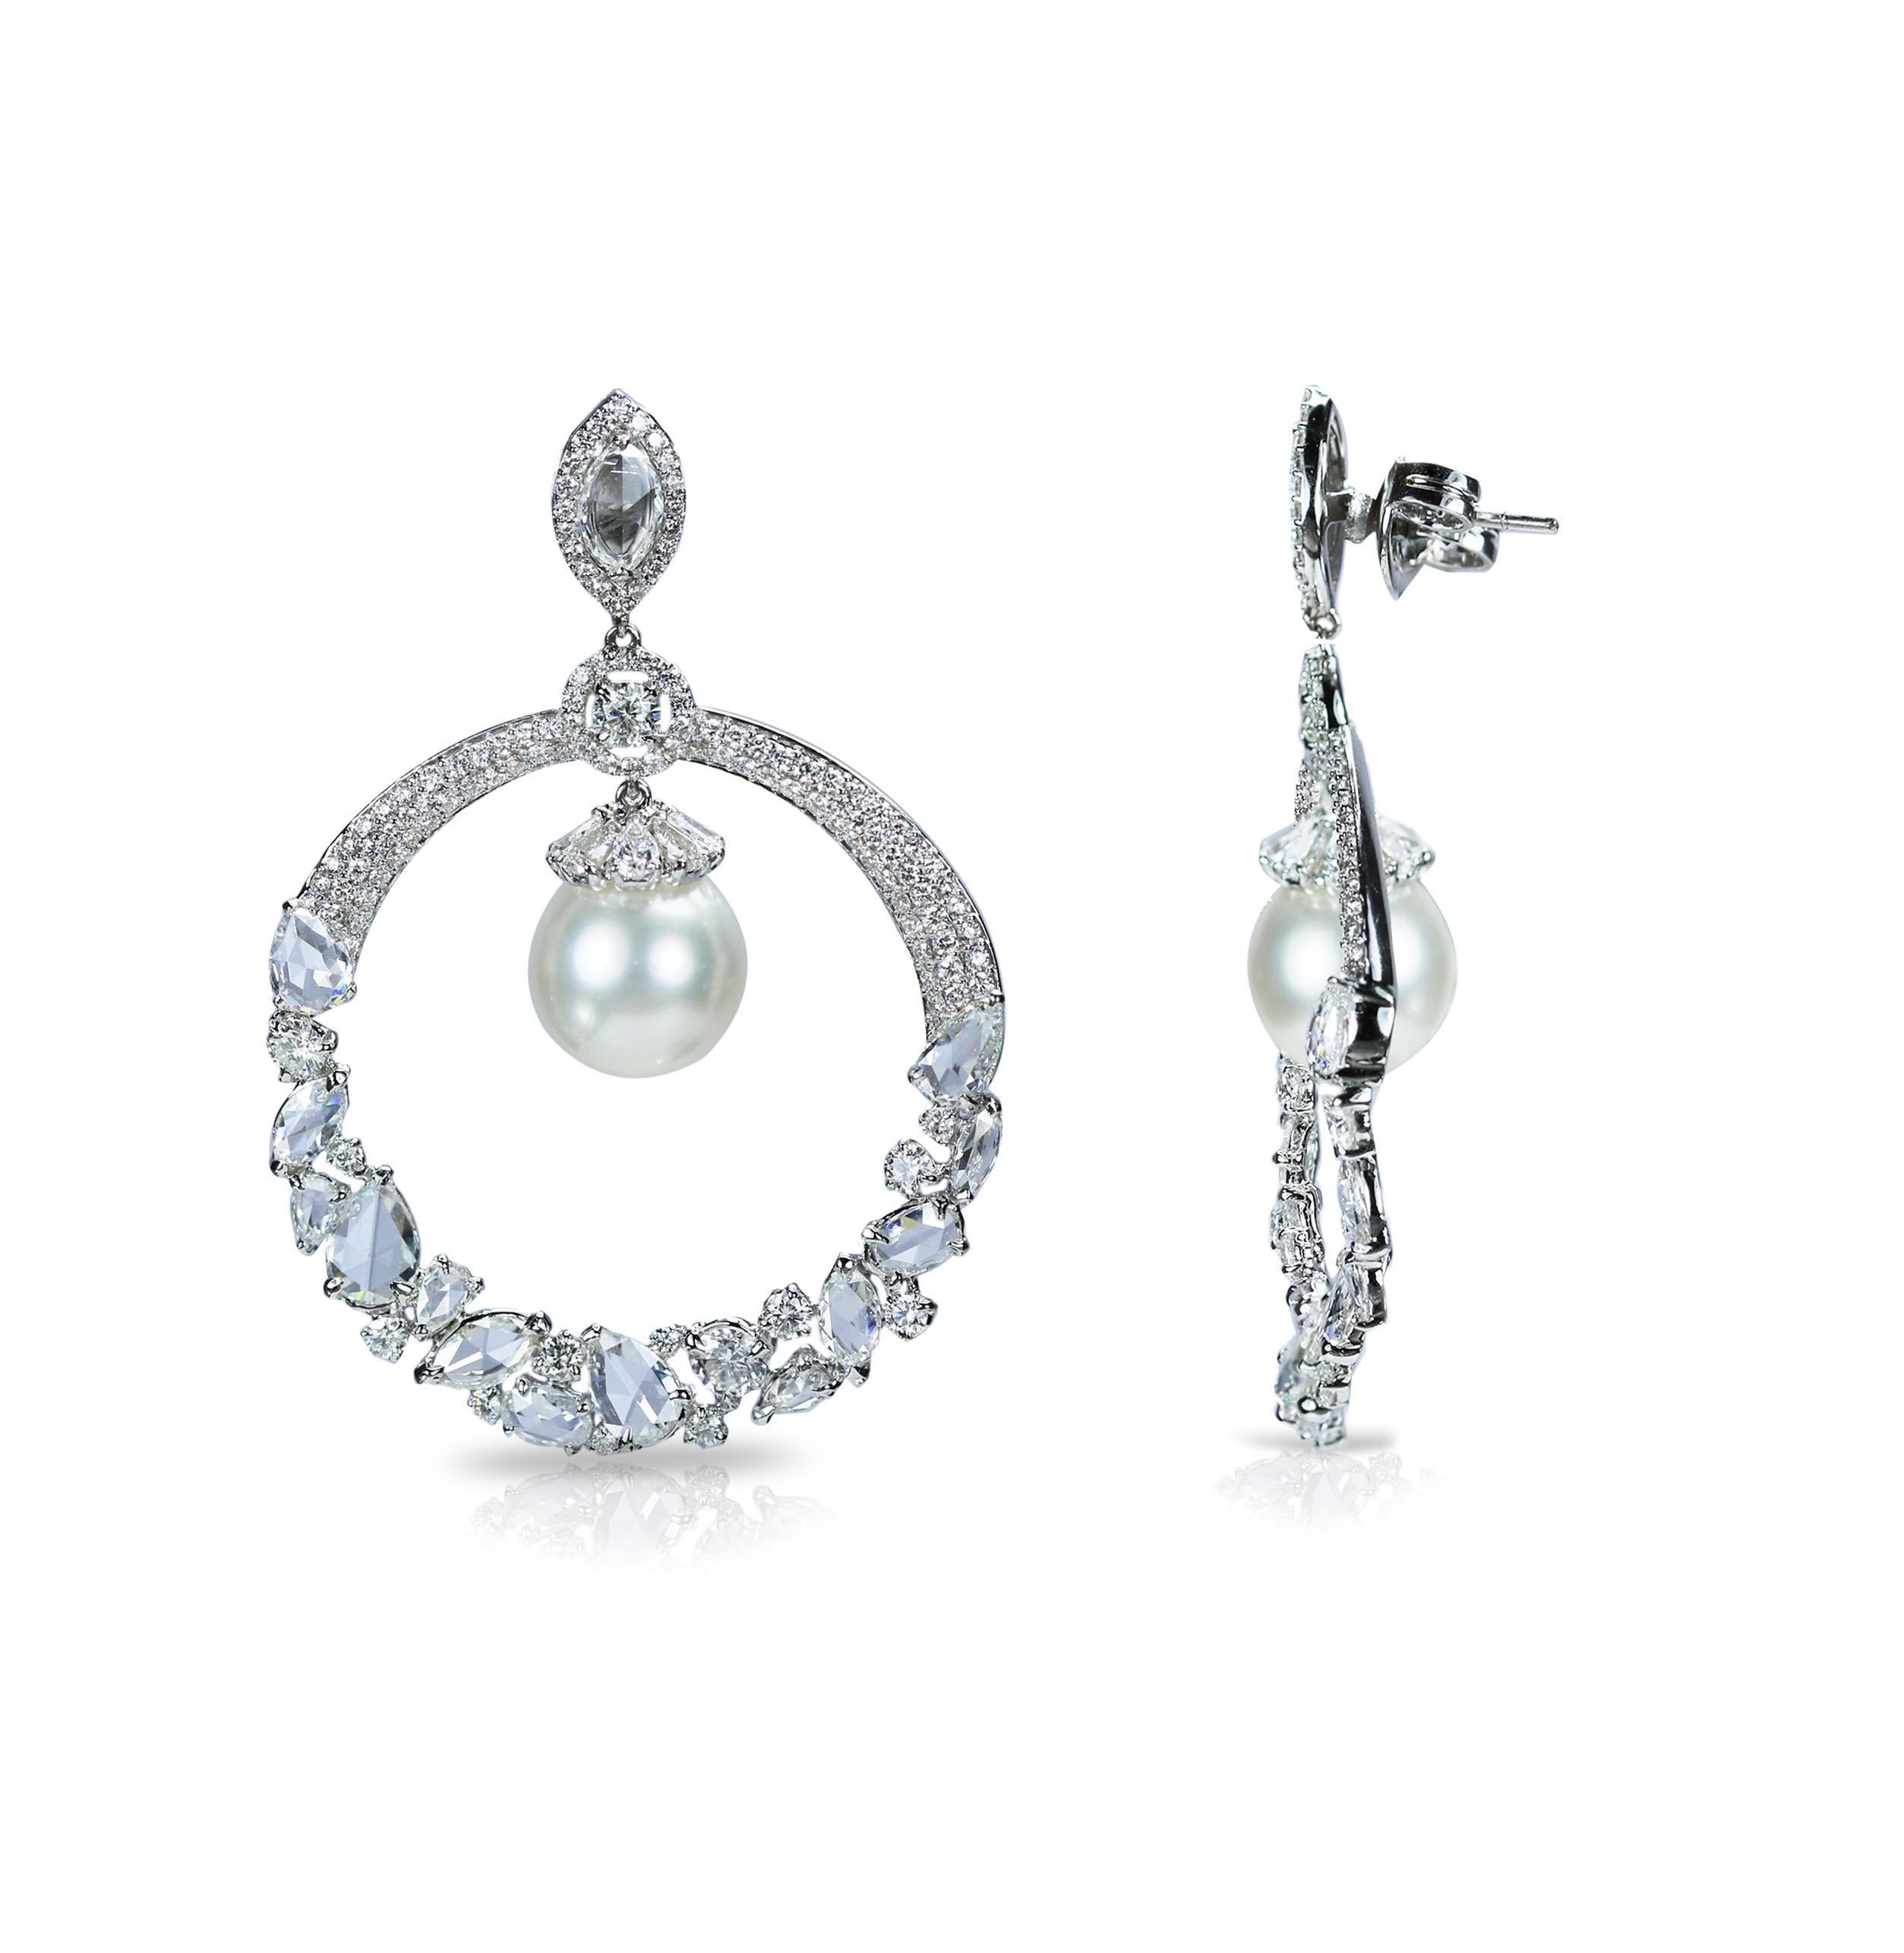 Contemporary Studio Rêves Diamonds and South Sea Pearls Dangling Earrings in 18 Karat Gold